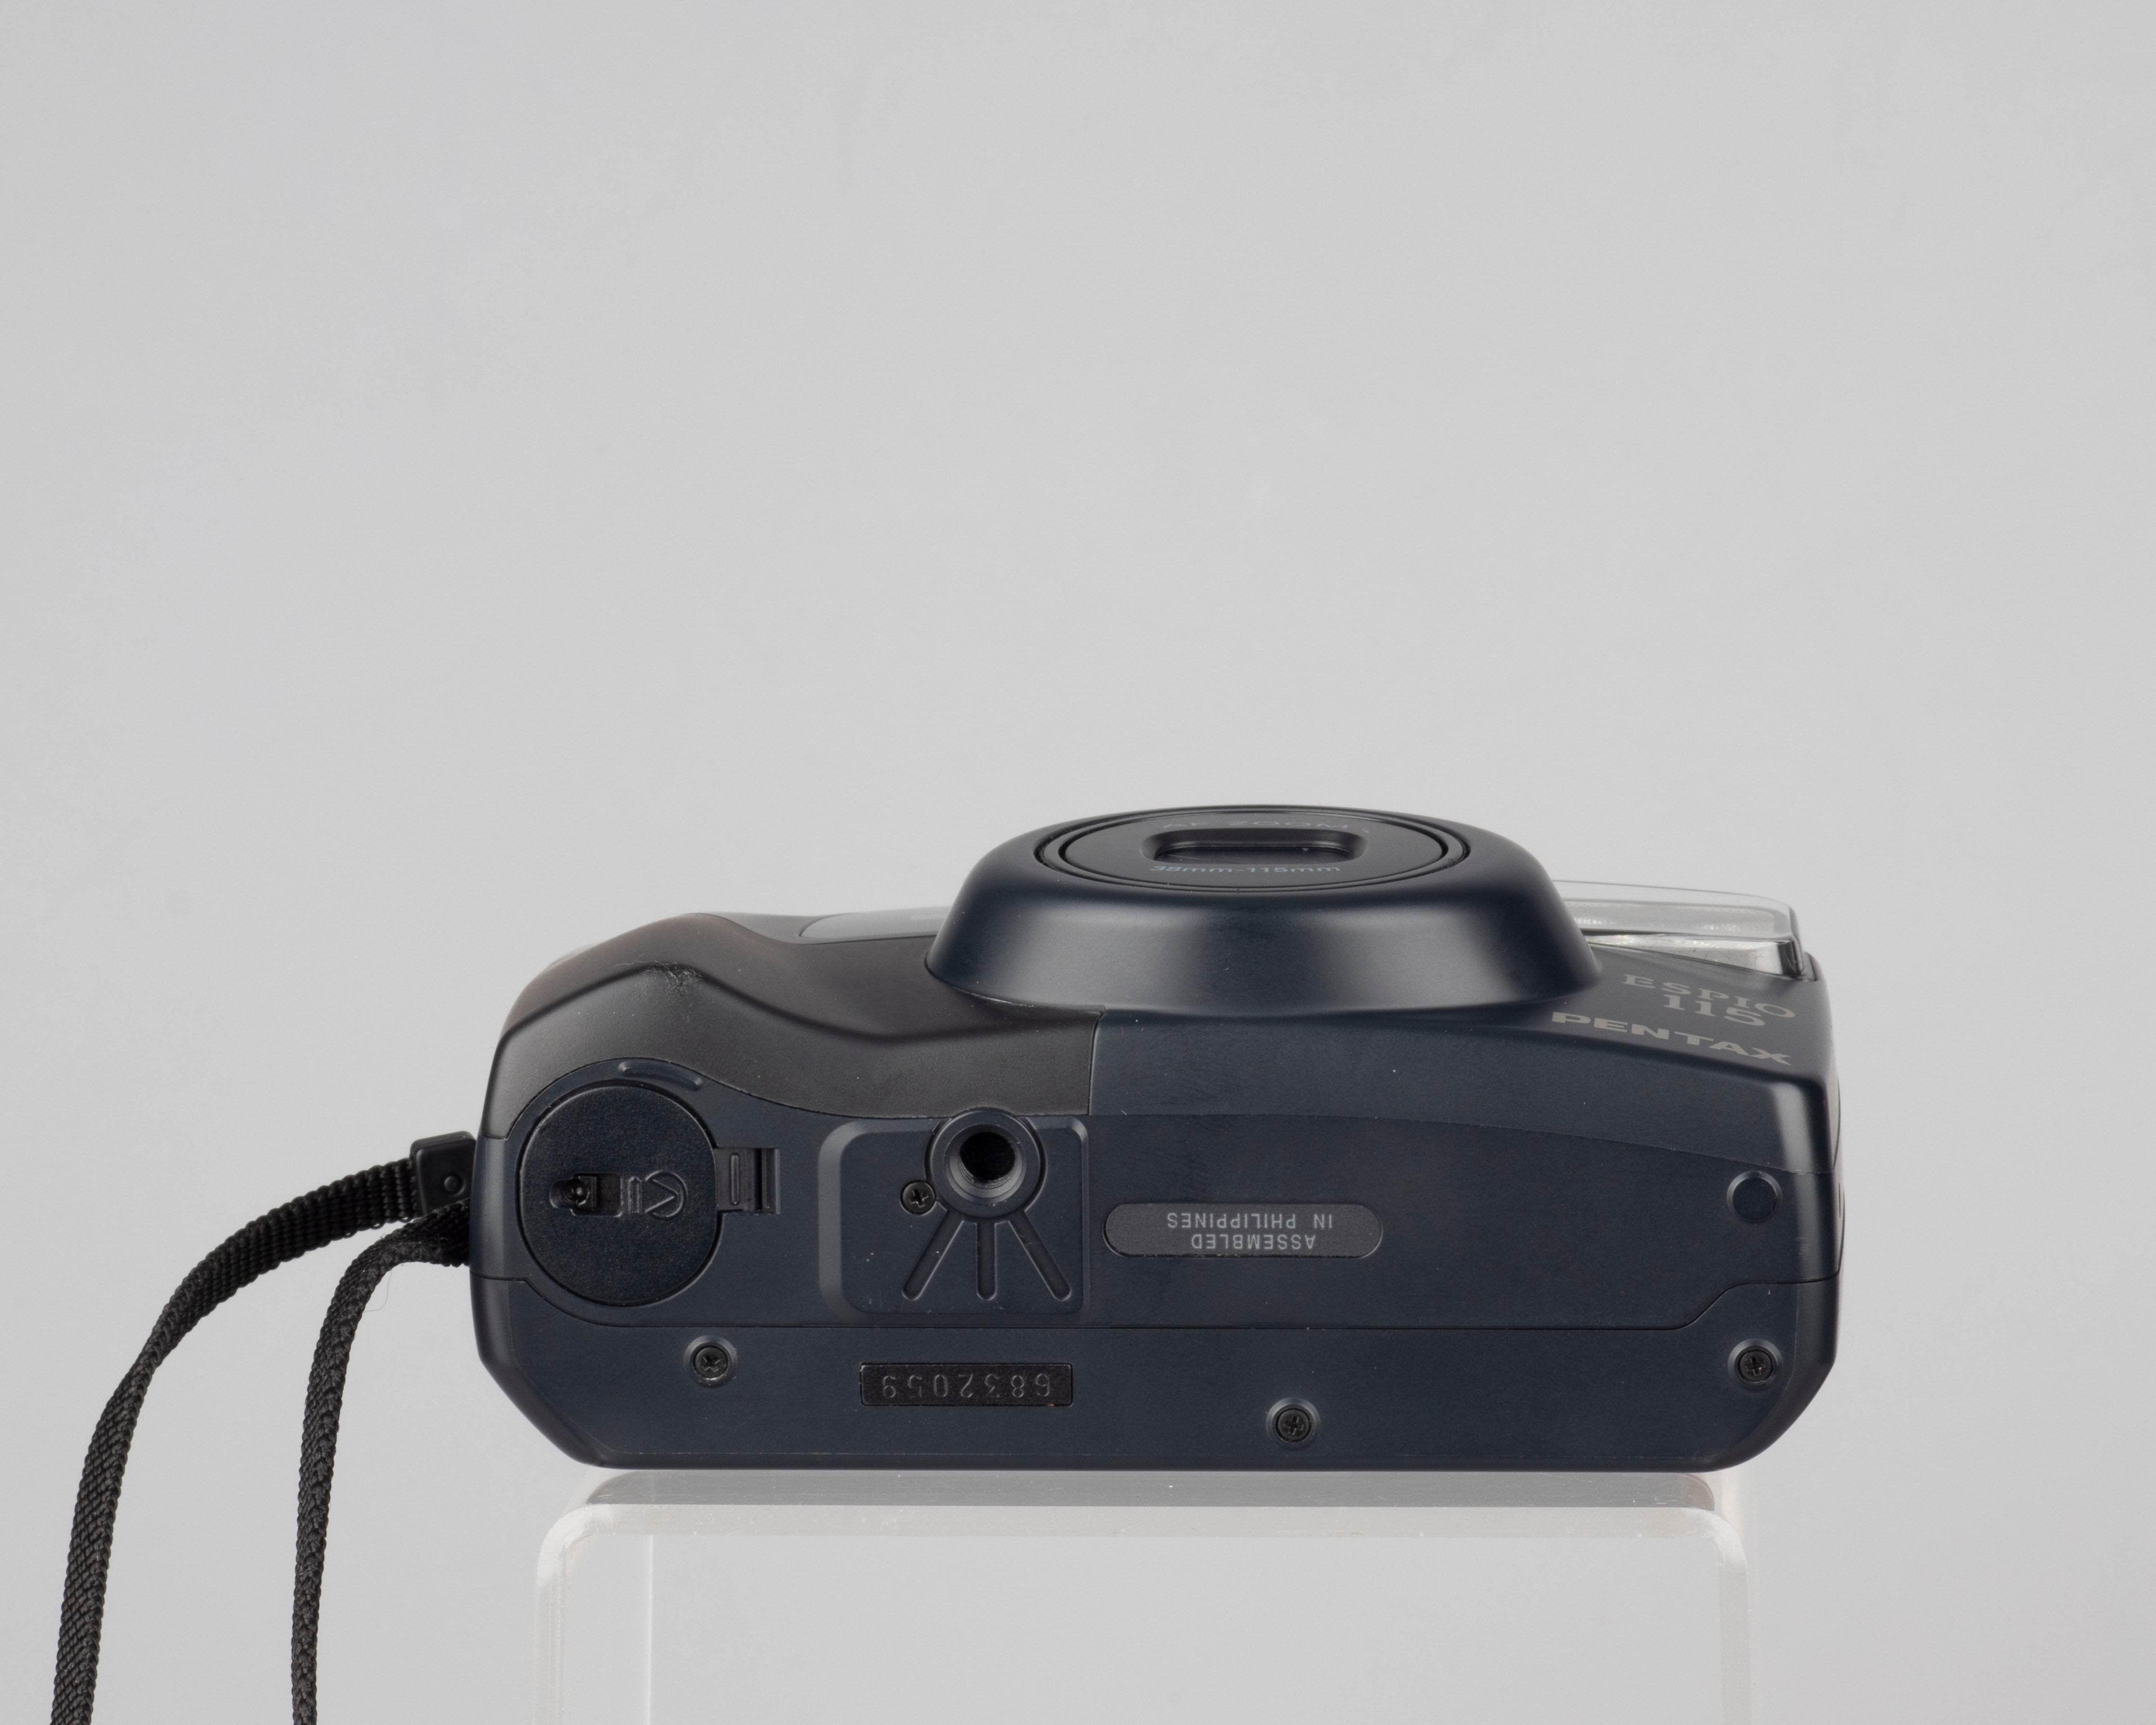 Pentax Espio 115 35mm camera w/ original case (serial 6832055